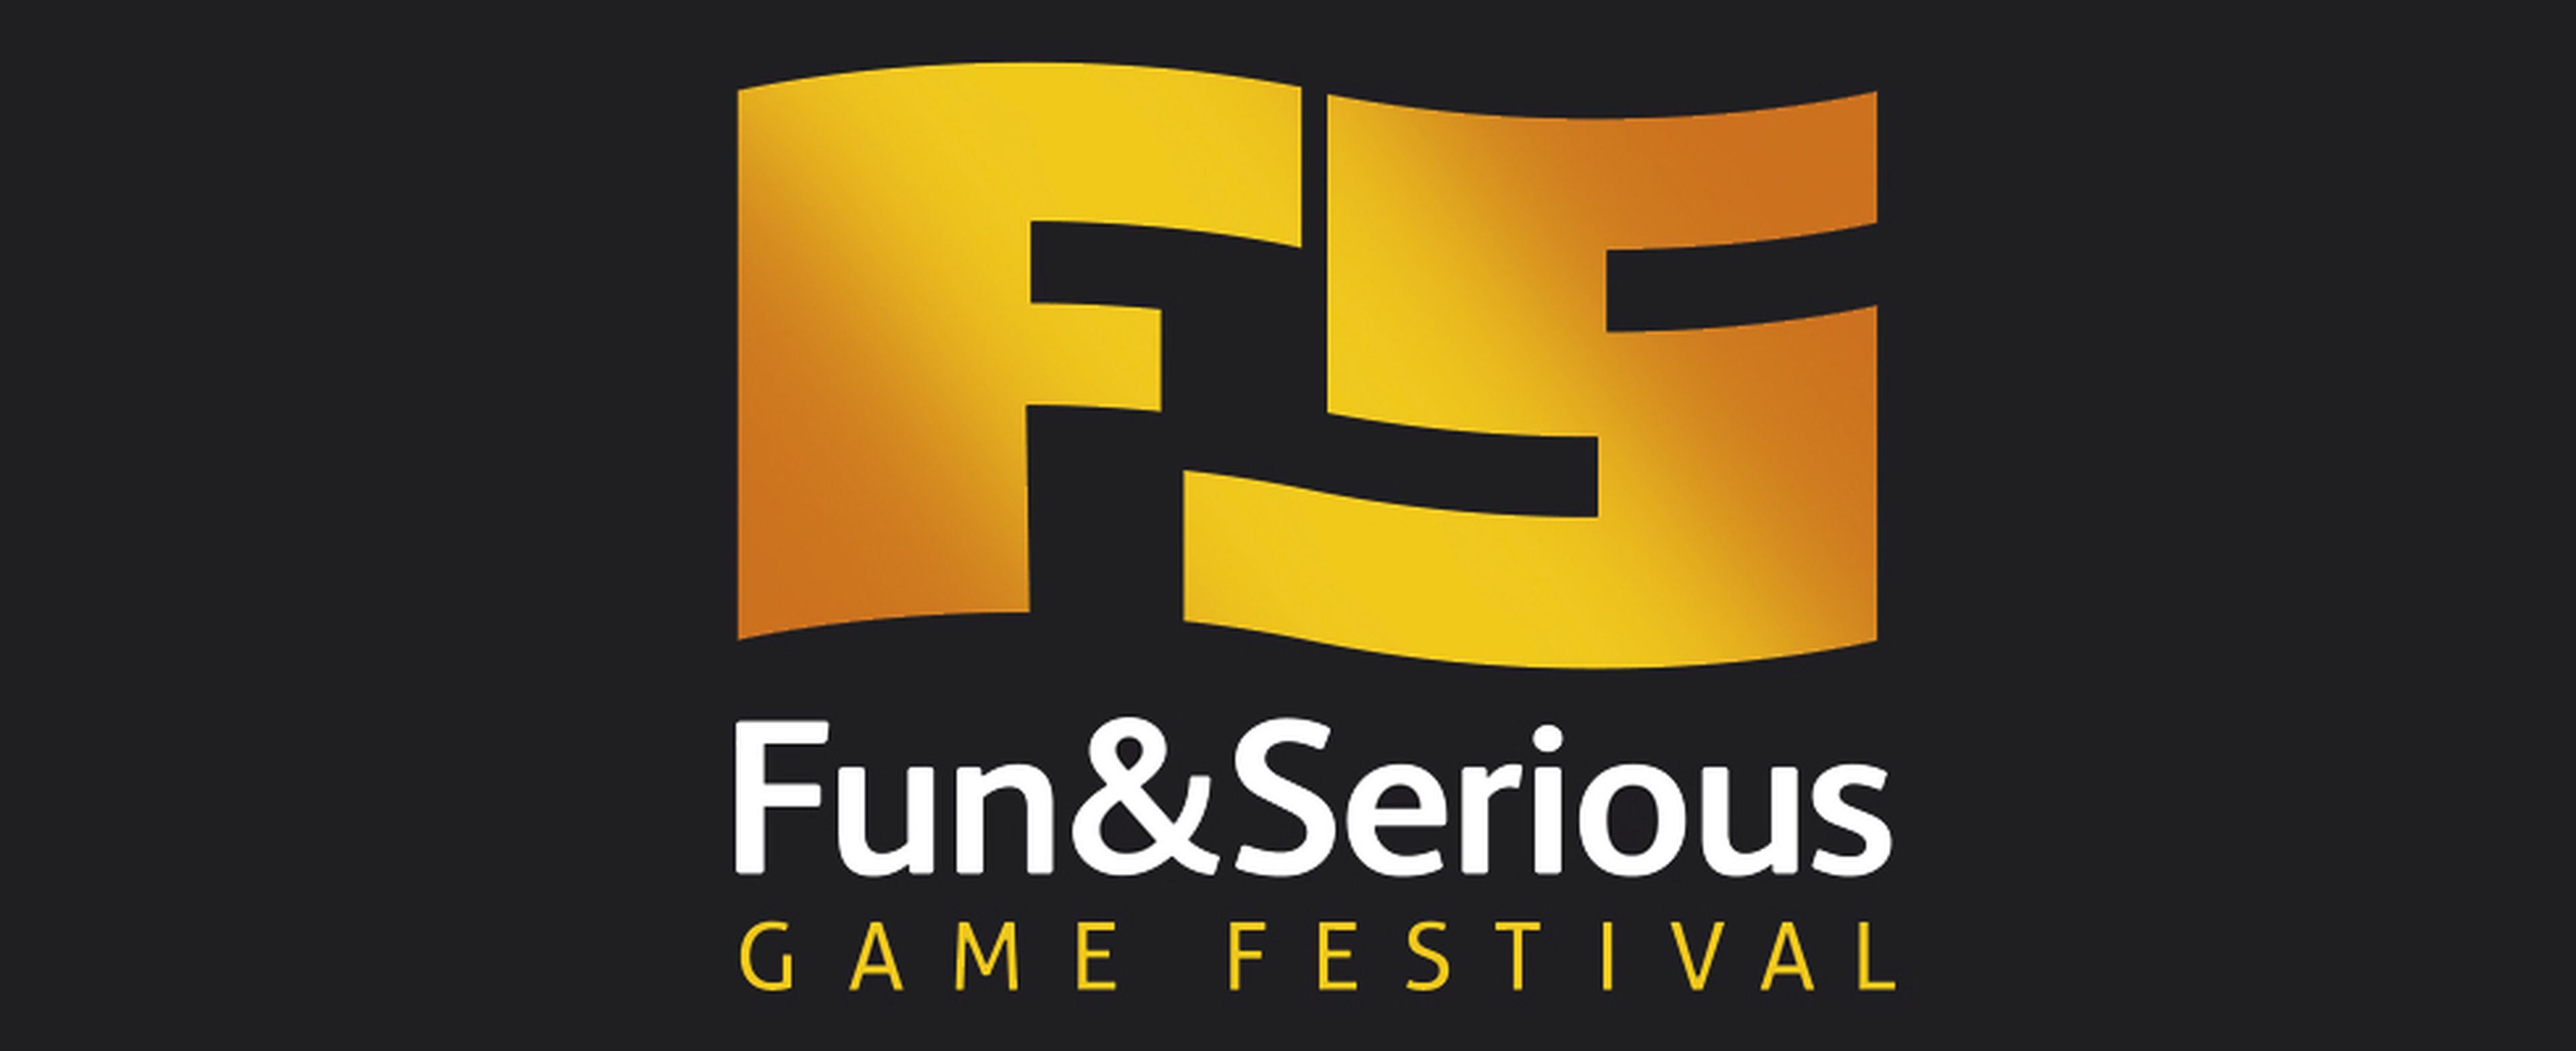 Fun & Serious 2016 logo cabecera